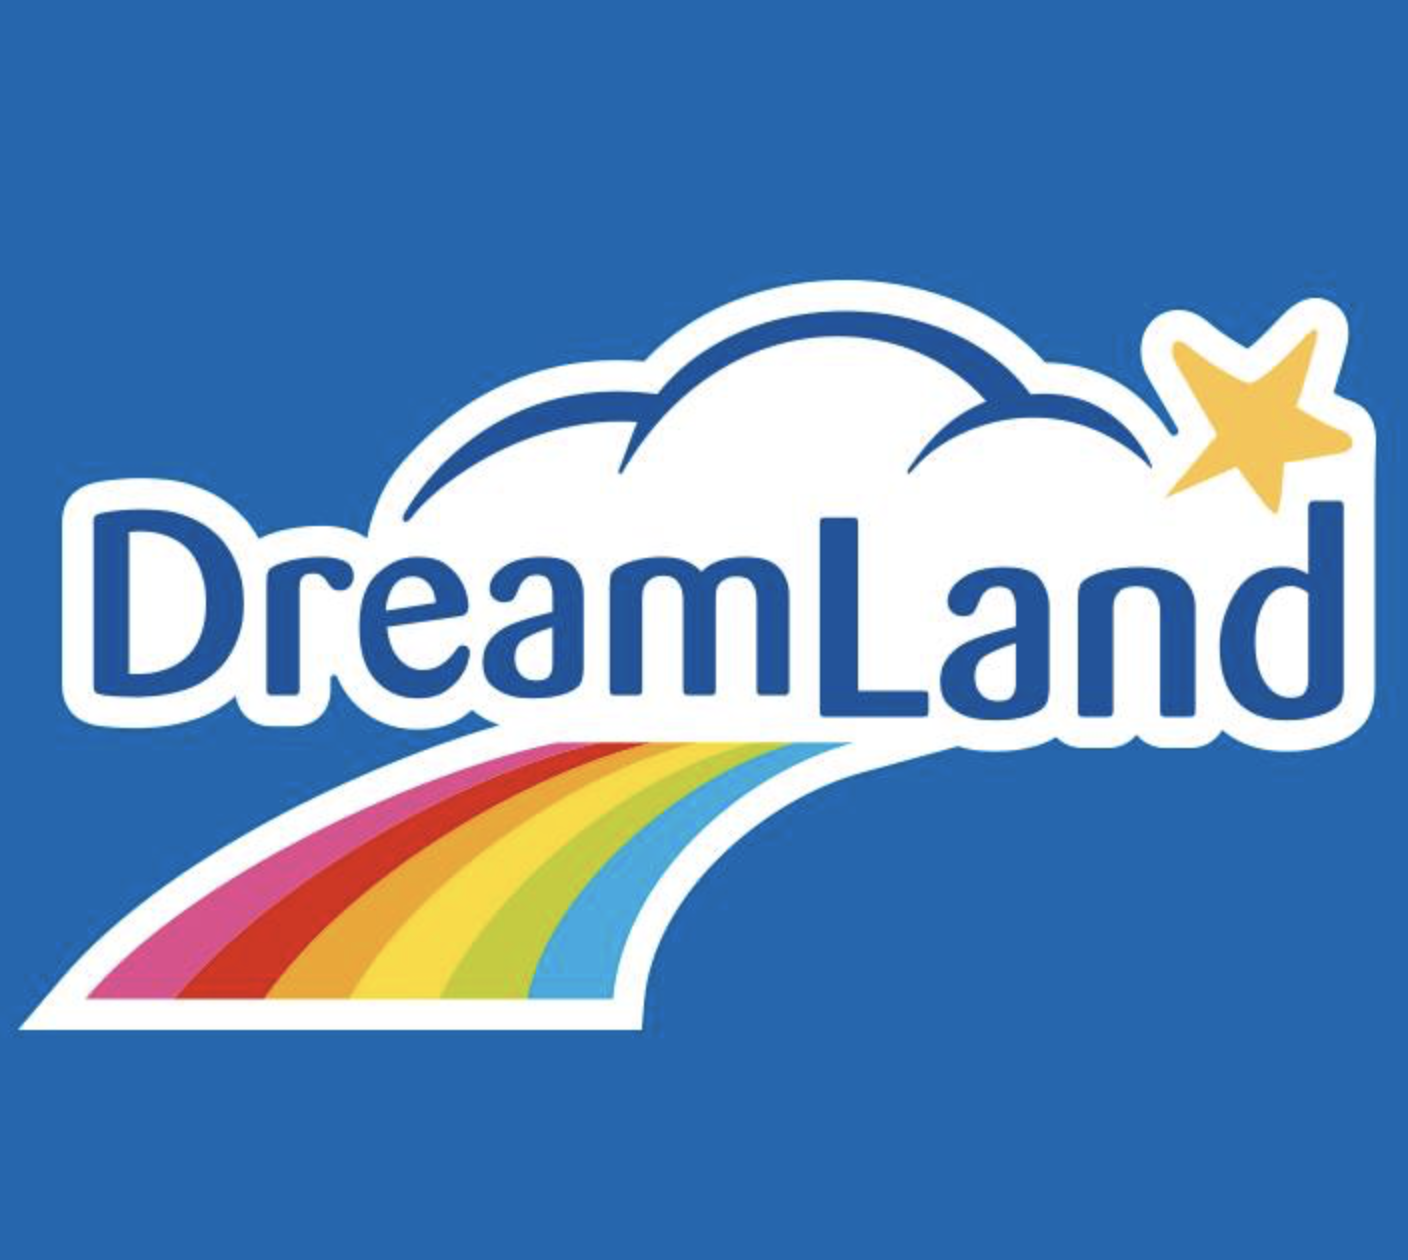 https://mastr.be/wp-content/uploads/2023/01/Dreamland-logo-MASTR.png